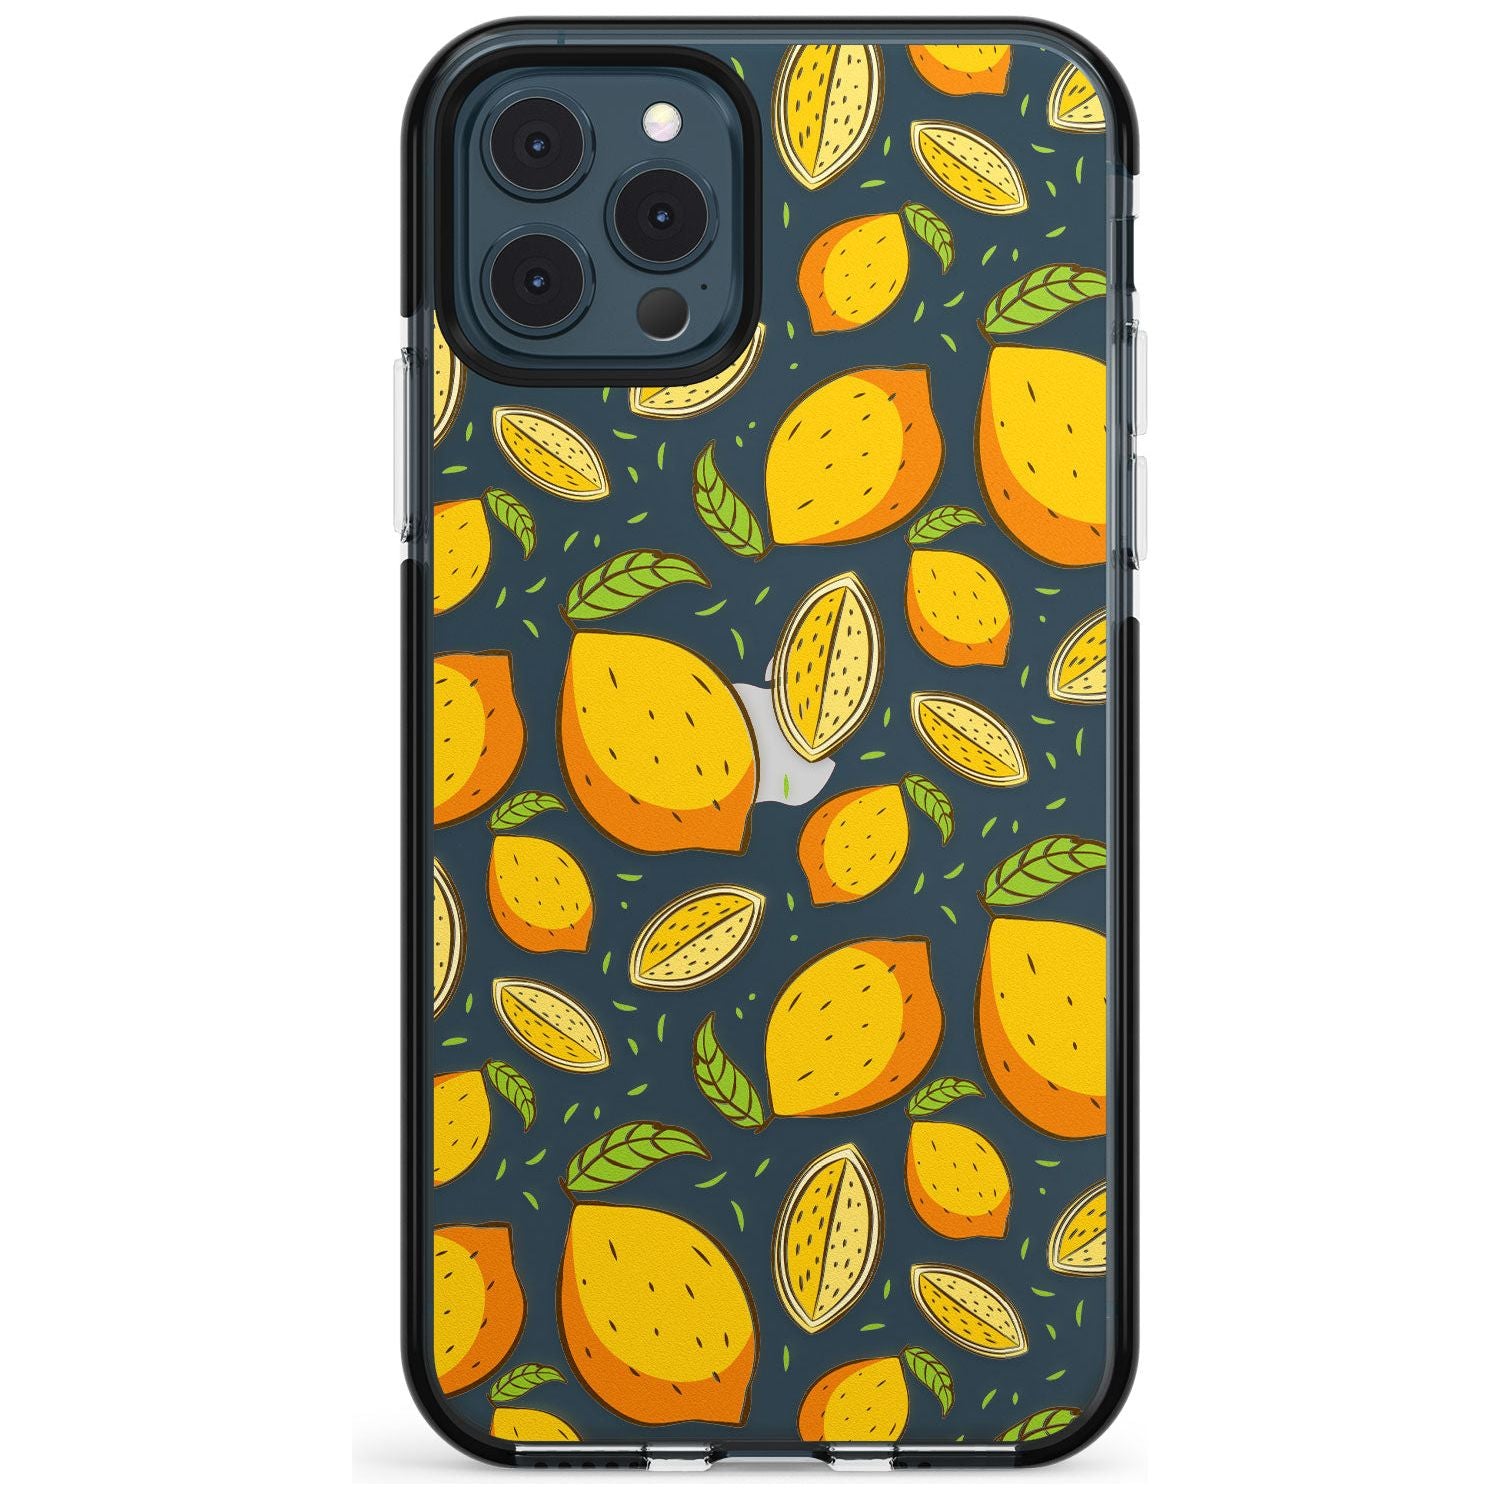 Lemon Pattern Black Impact Phone Case for iPhone 11